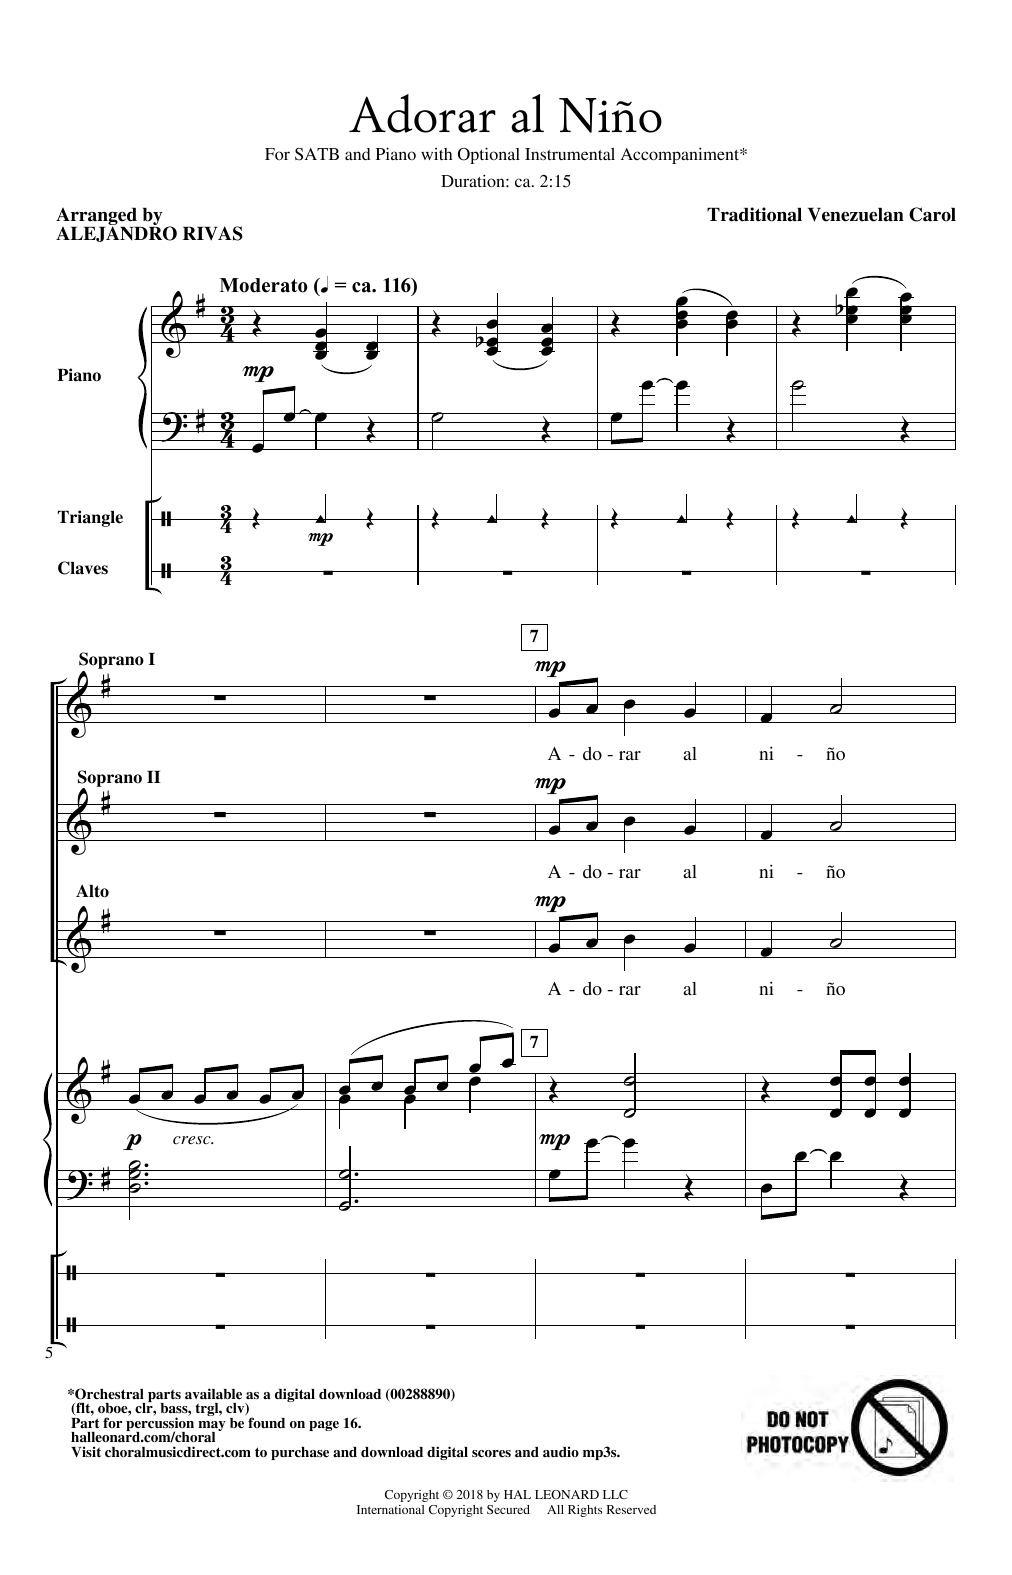 Download Alejandro Rivas Adorar Al Nino Sheet Music and learn how to play SSA Choir PDF digital score in minutes